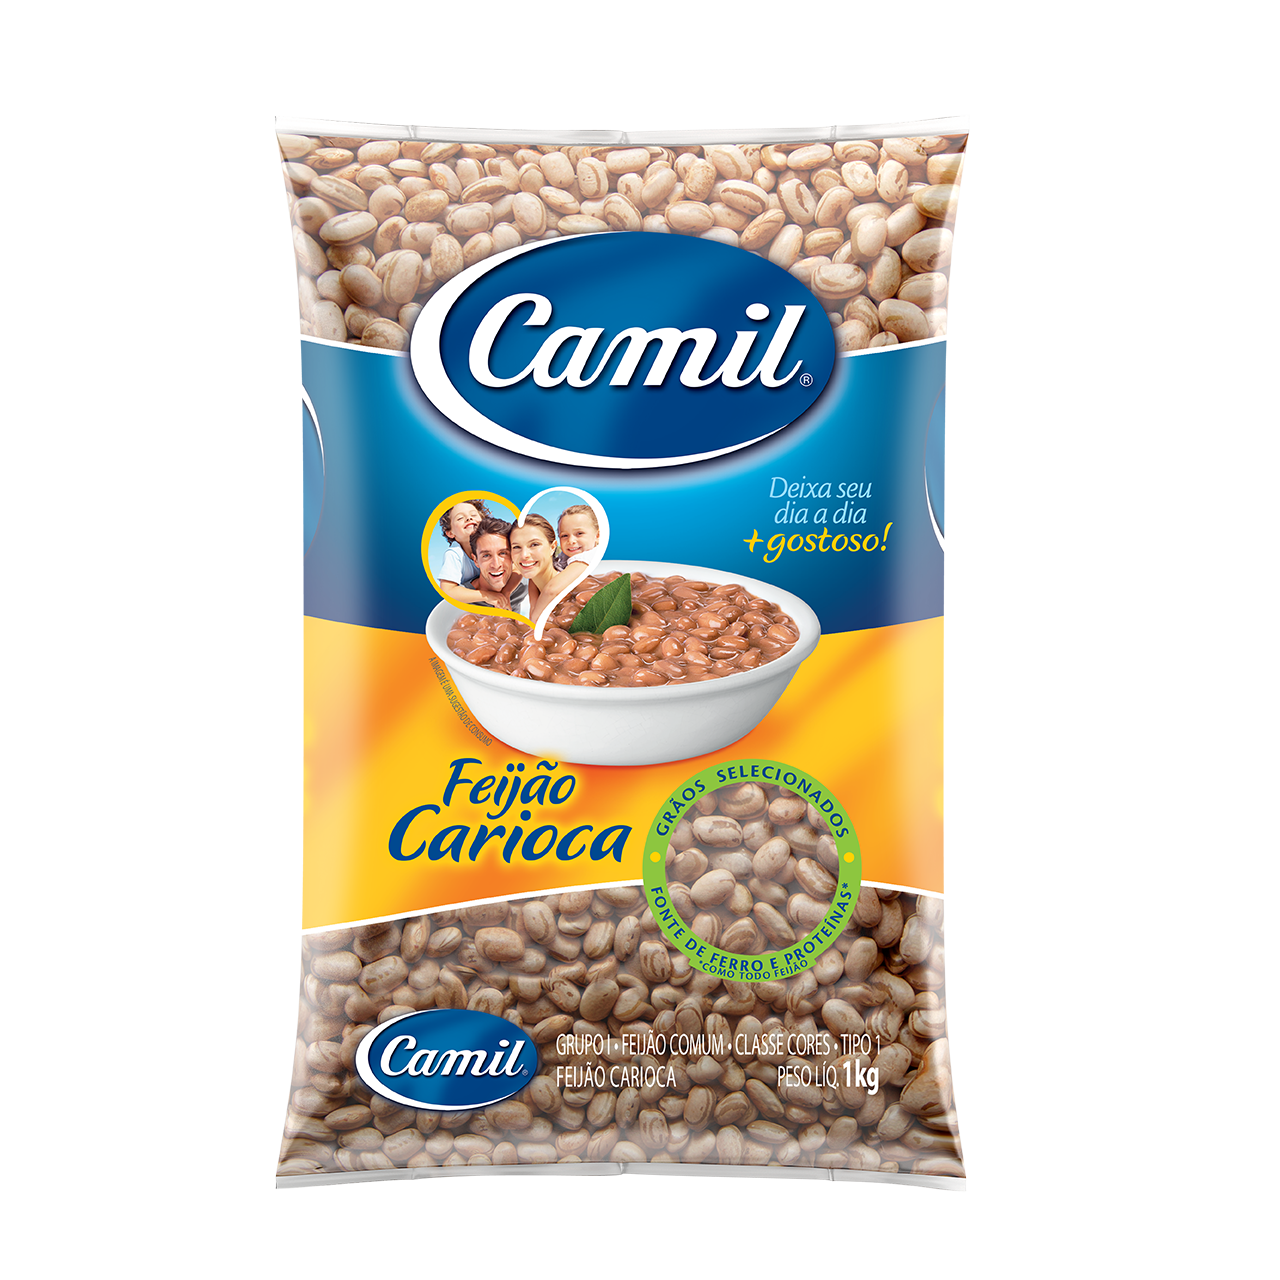 Camil carioca beans – frijol carioca – haricots bruns – feijo carioca – 1kg